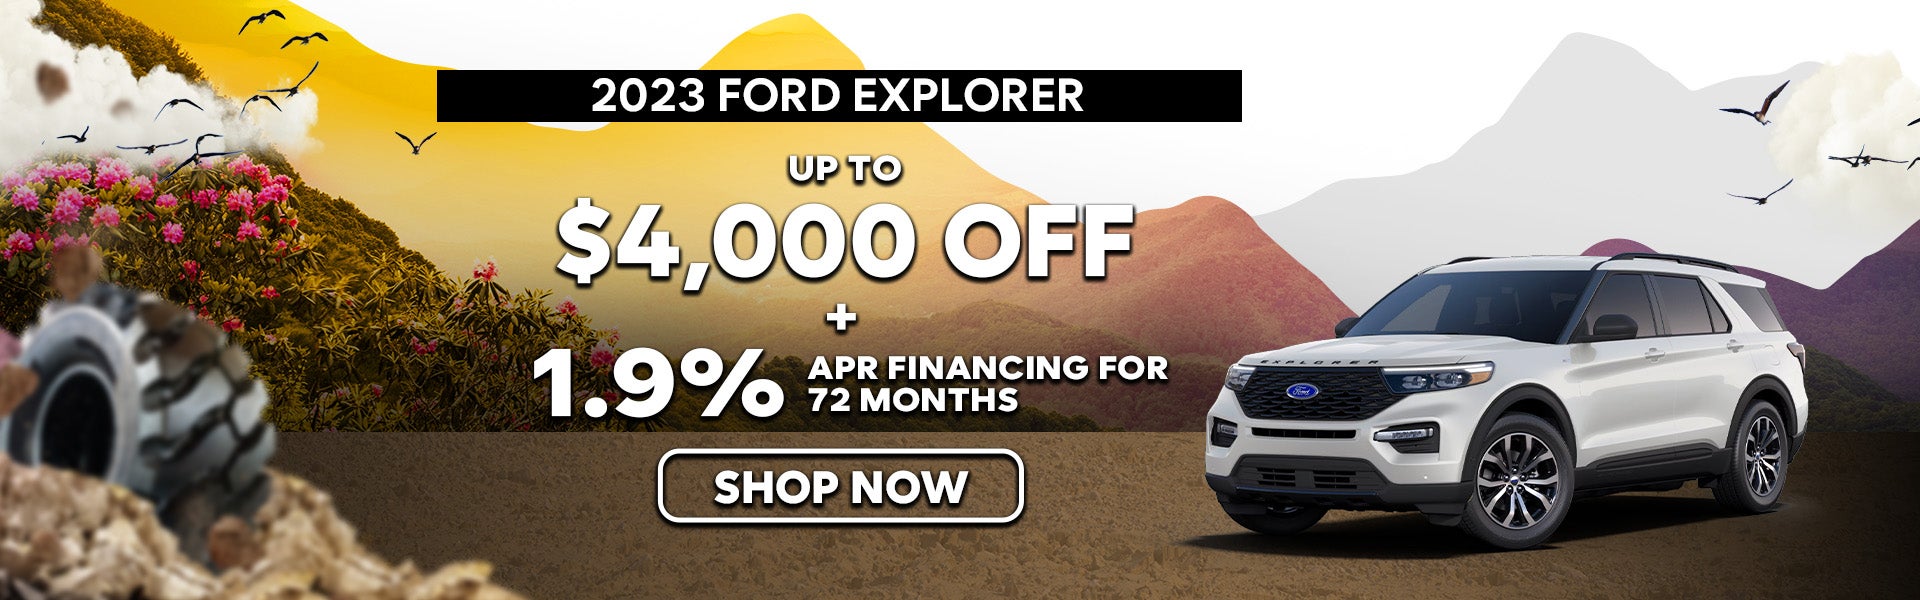 2023 Ford Explorer Special Offer